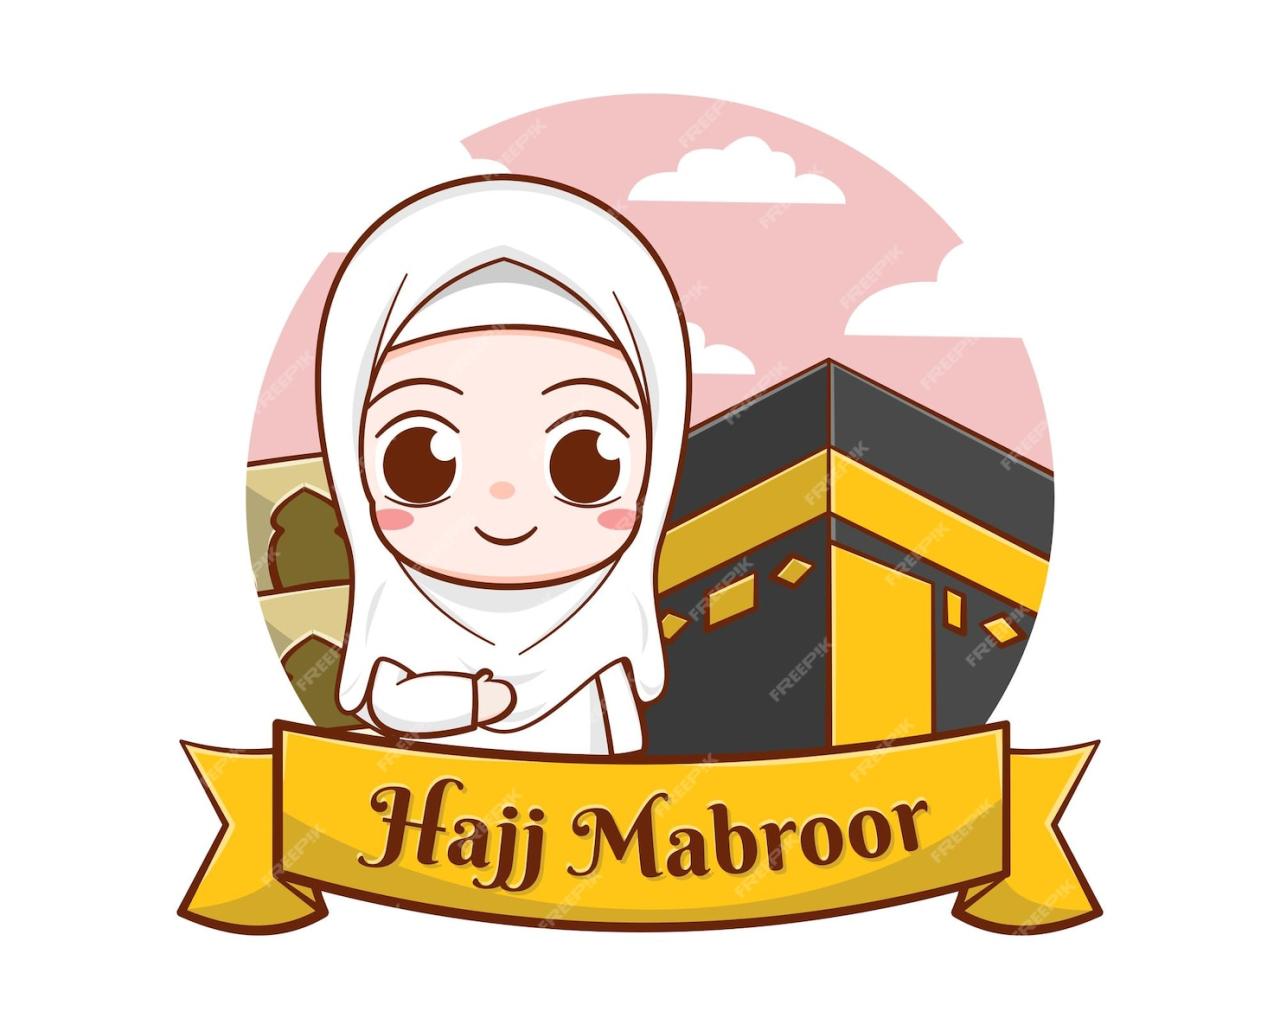 Haji kecil adalah nama lain dari